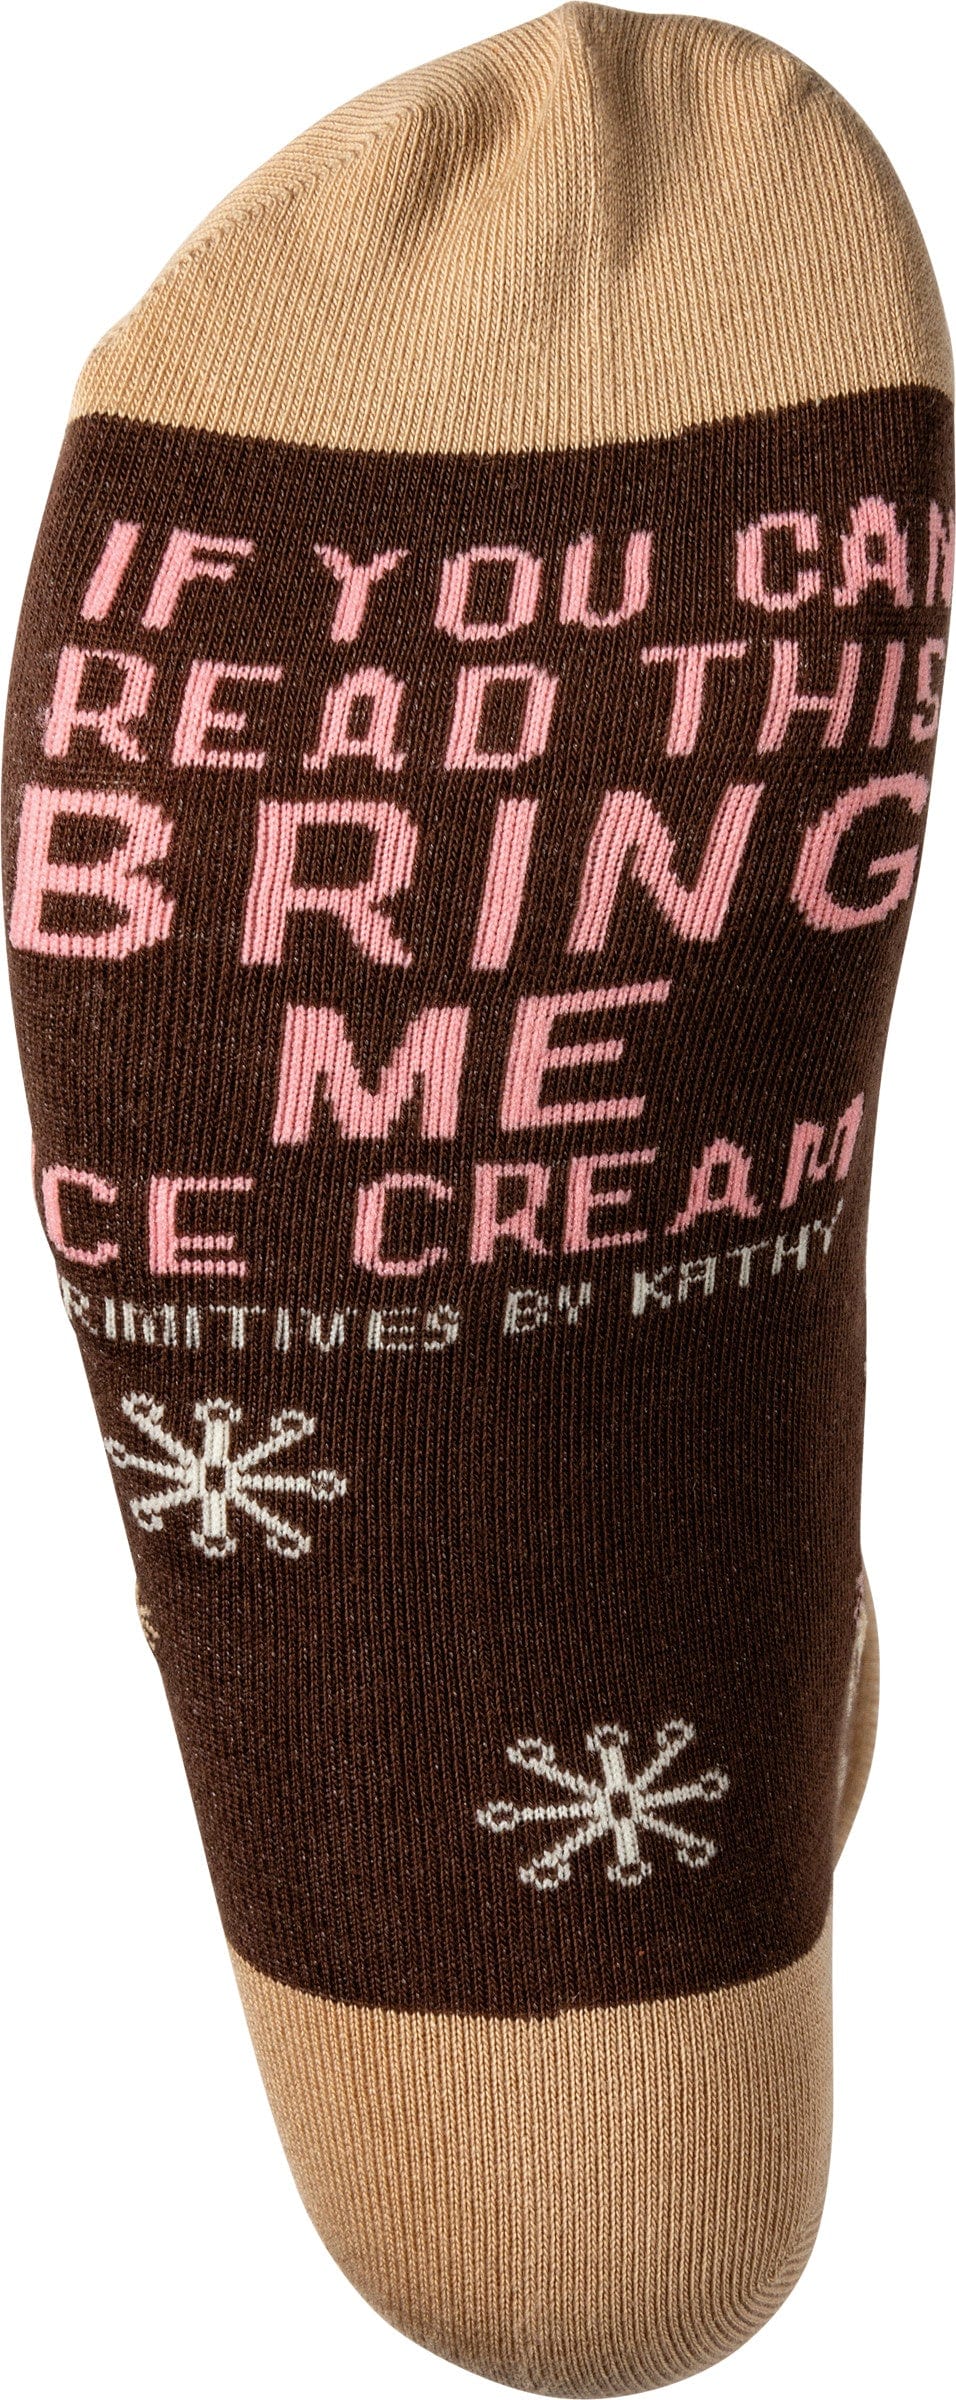 Socks One Size Fits Most Socks - Ice Cream Makes Me Happy PBK-105090-ICECREAM